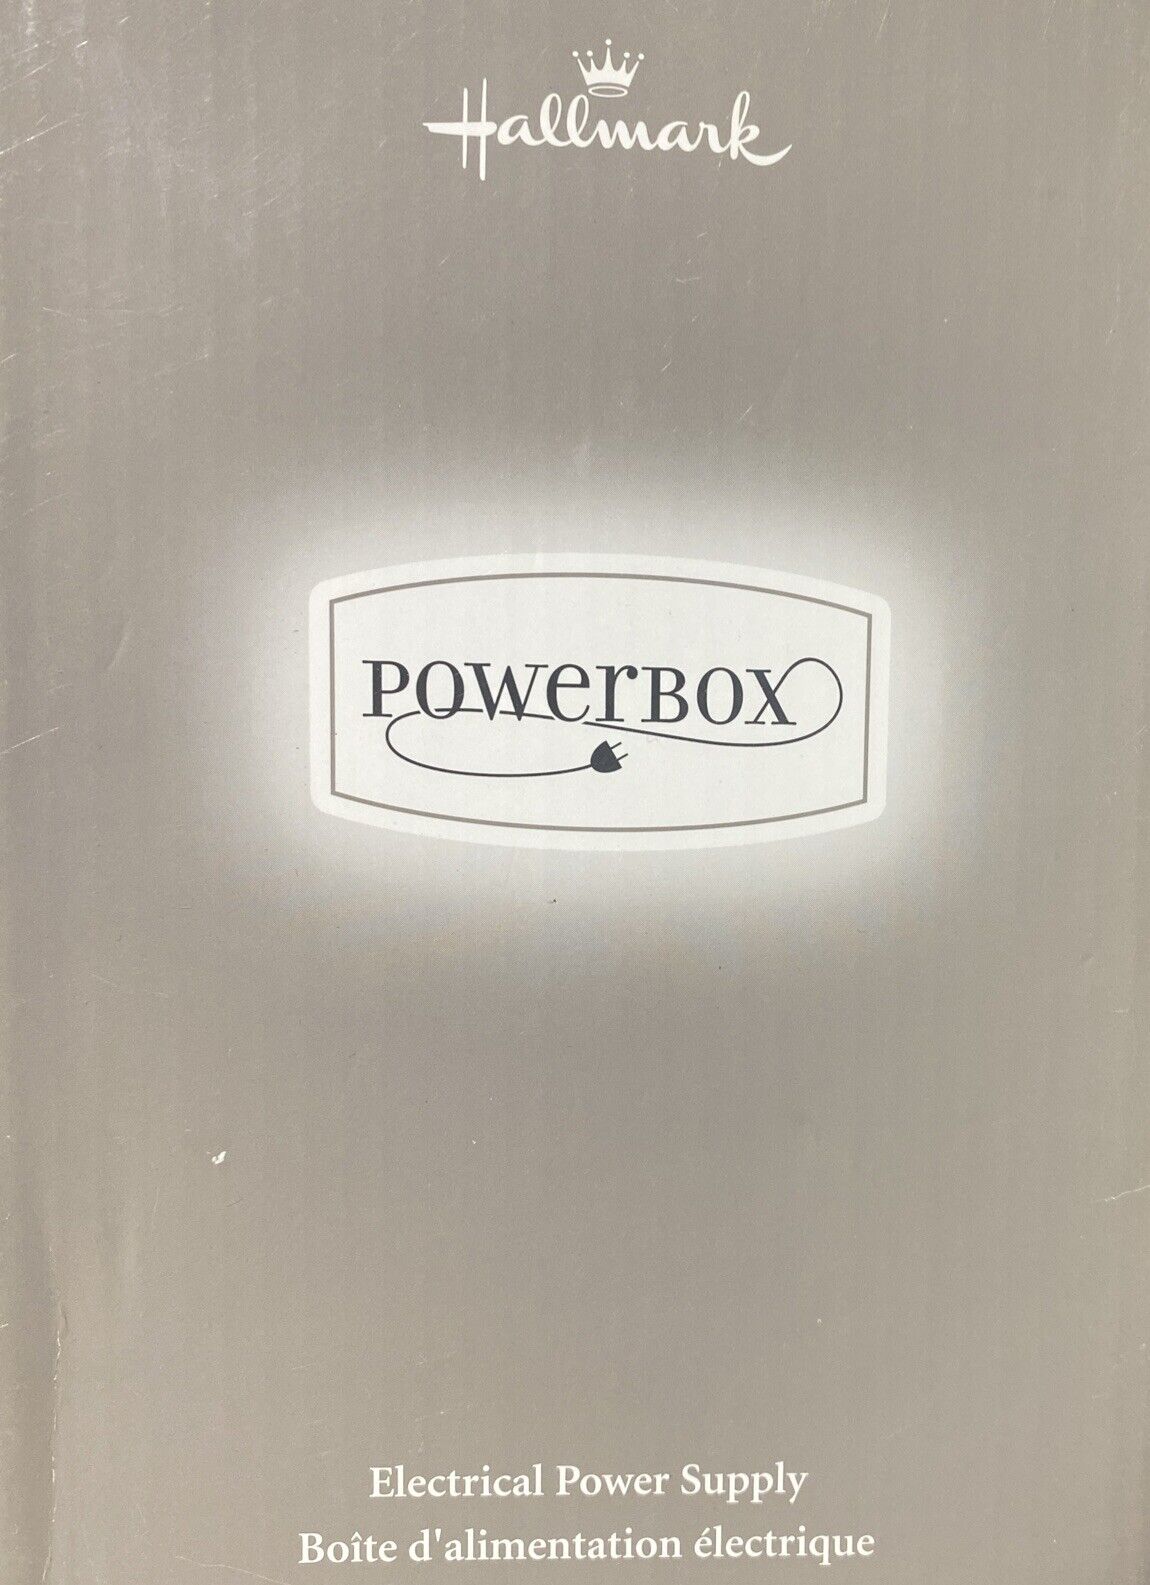 Hallmark Powerbox Ornament - Gray